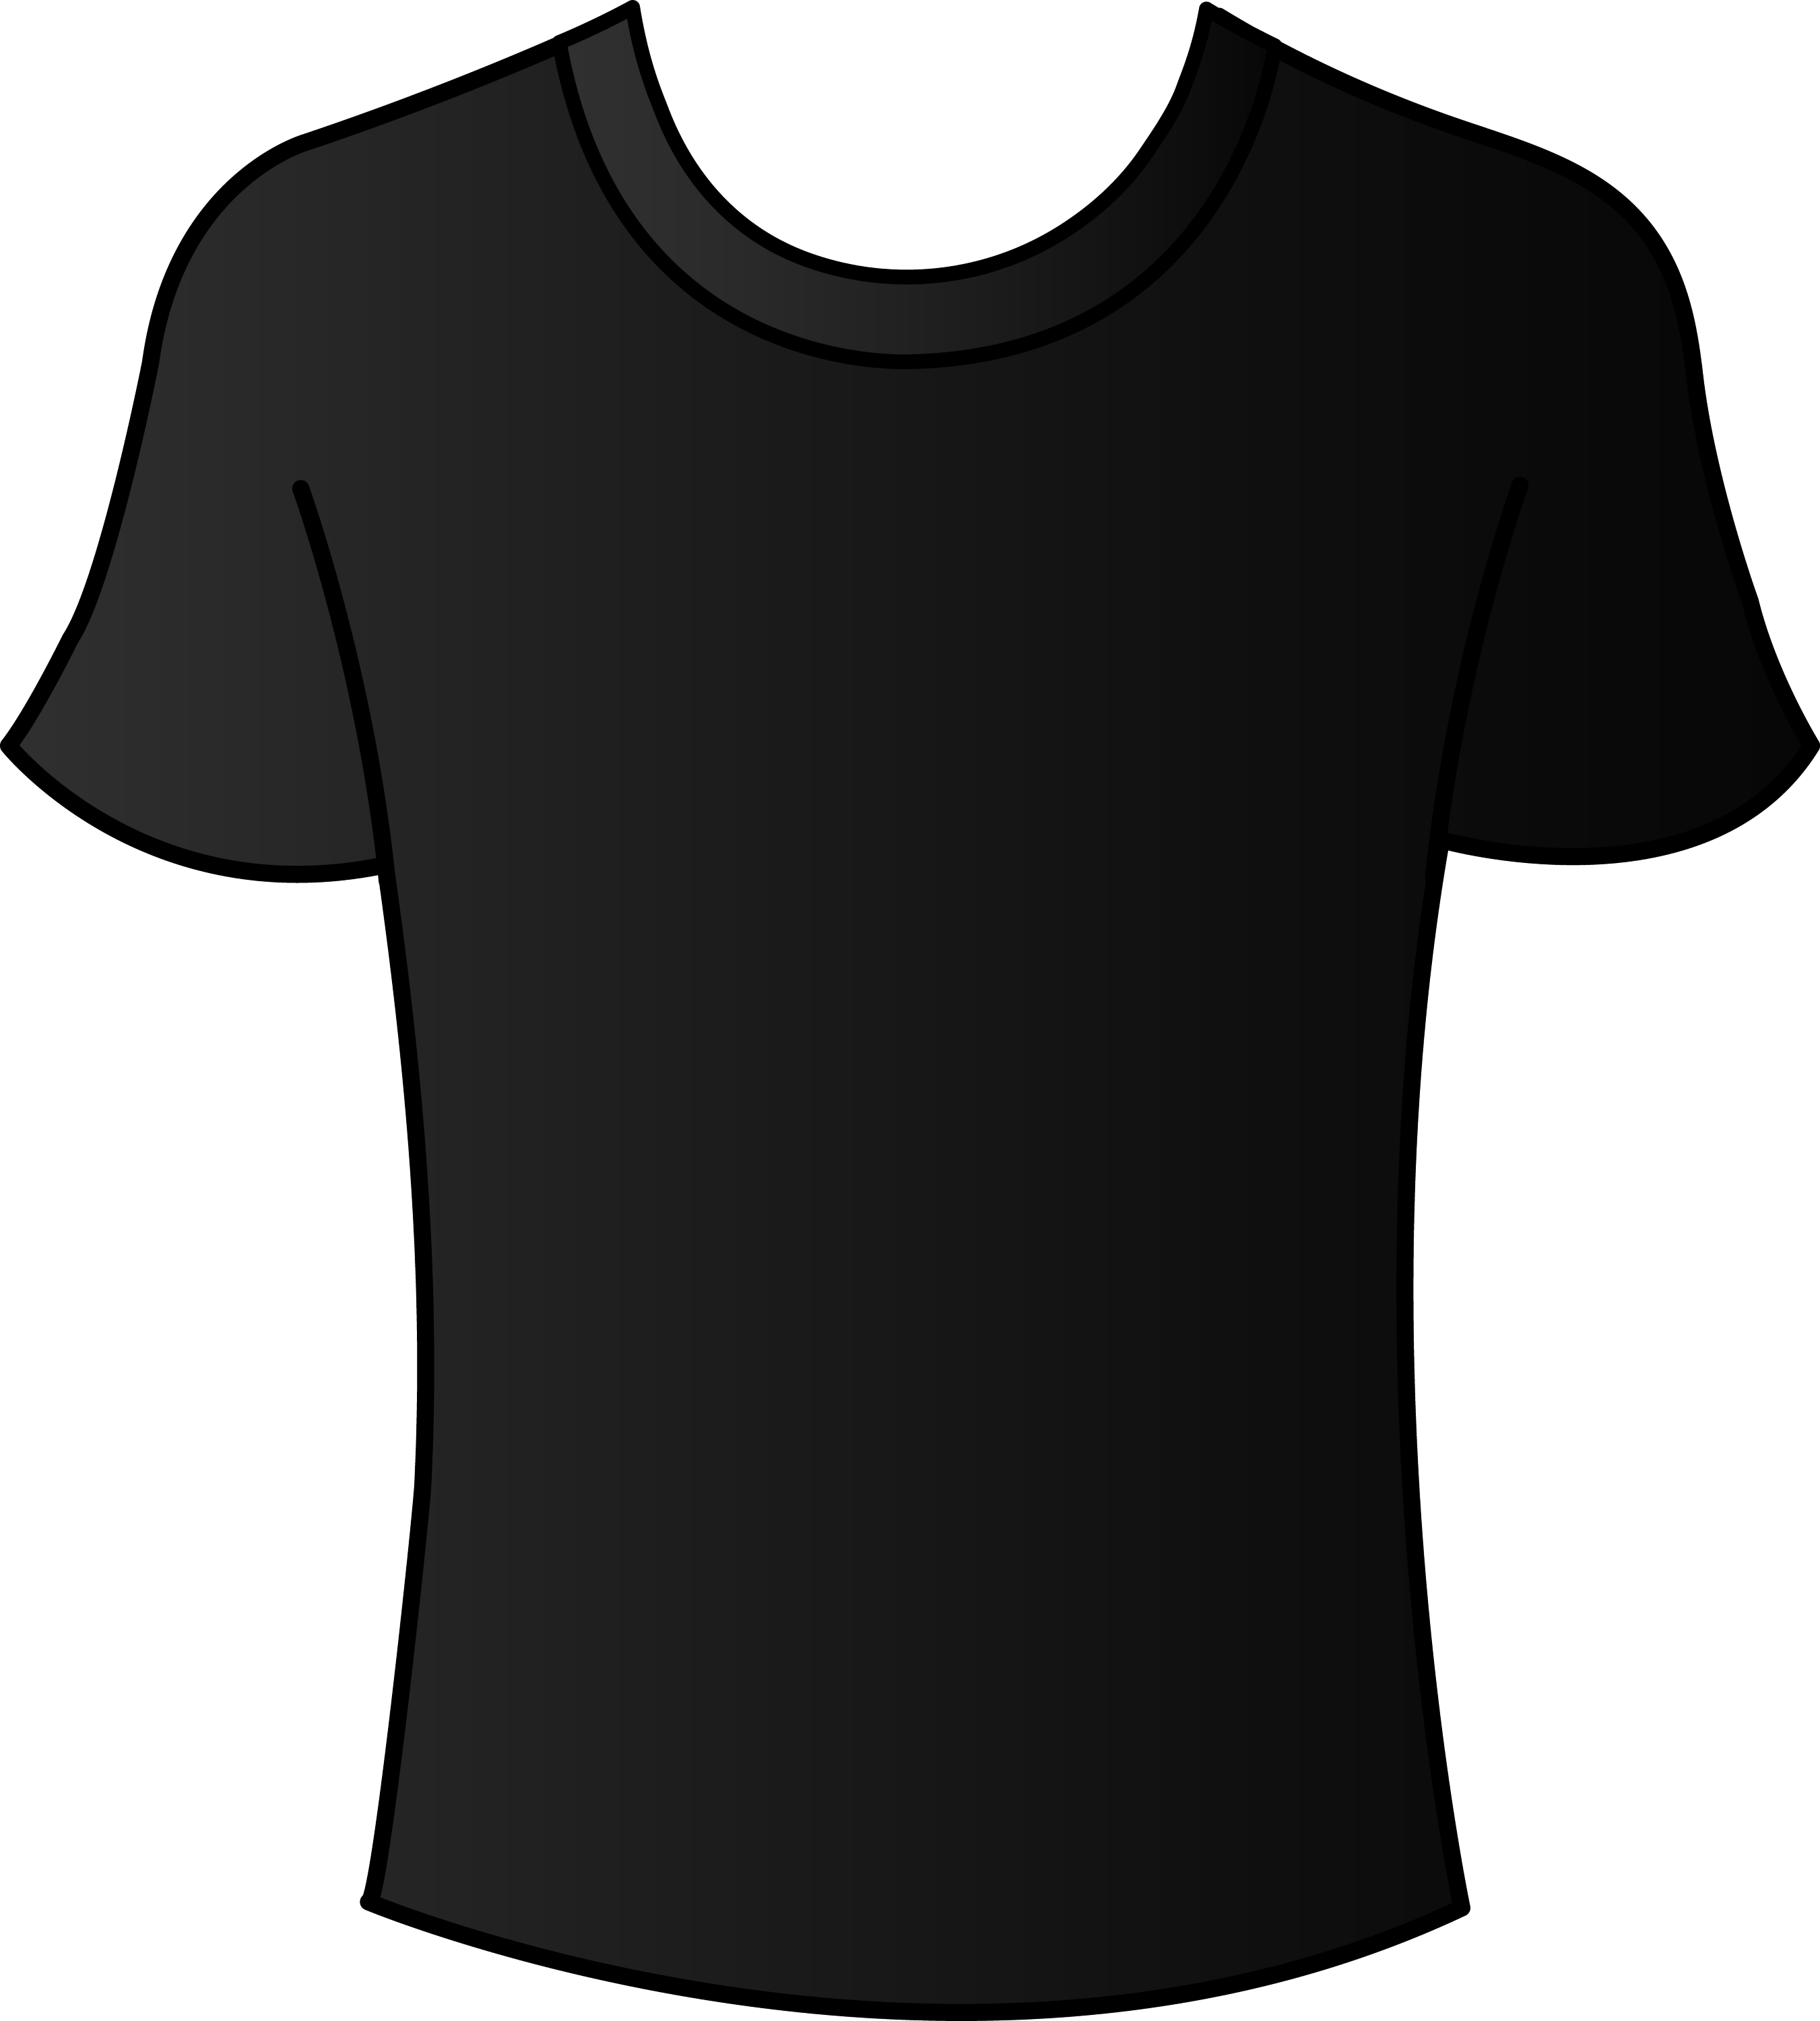 clip art black t shirt - photo #12